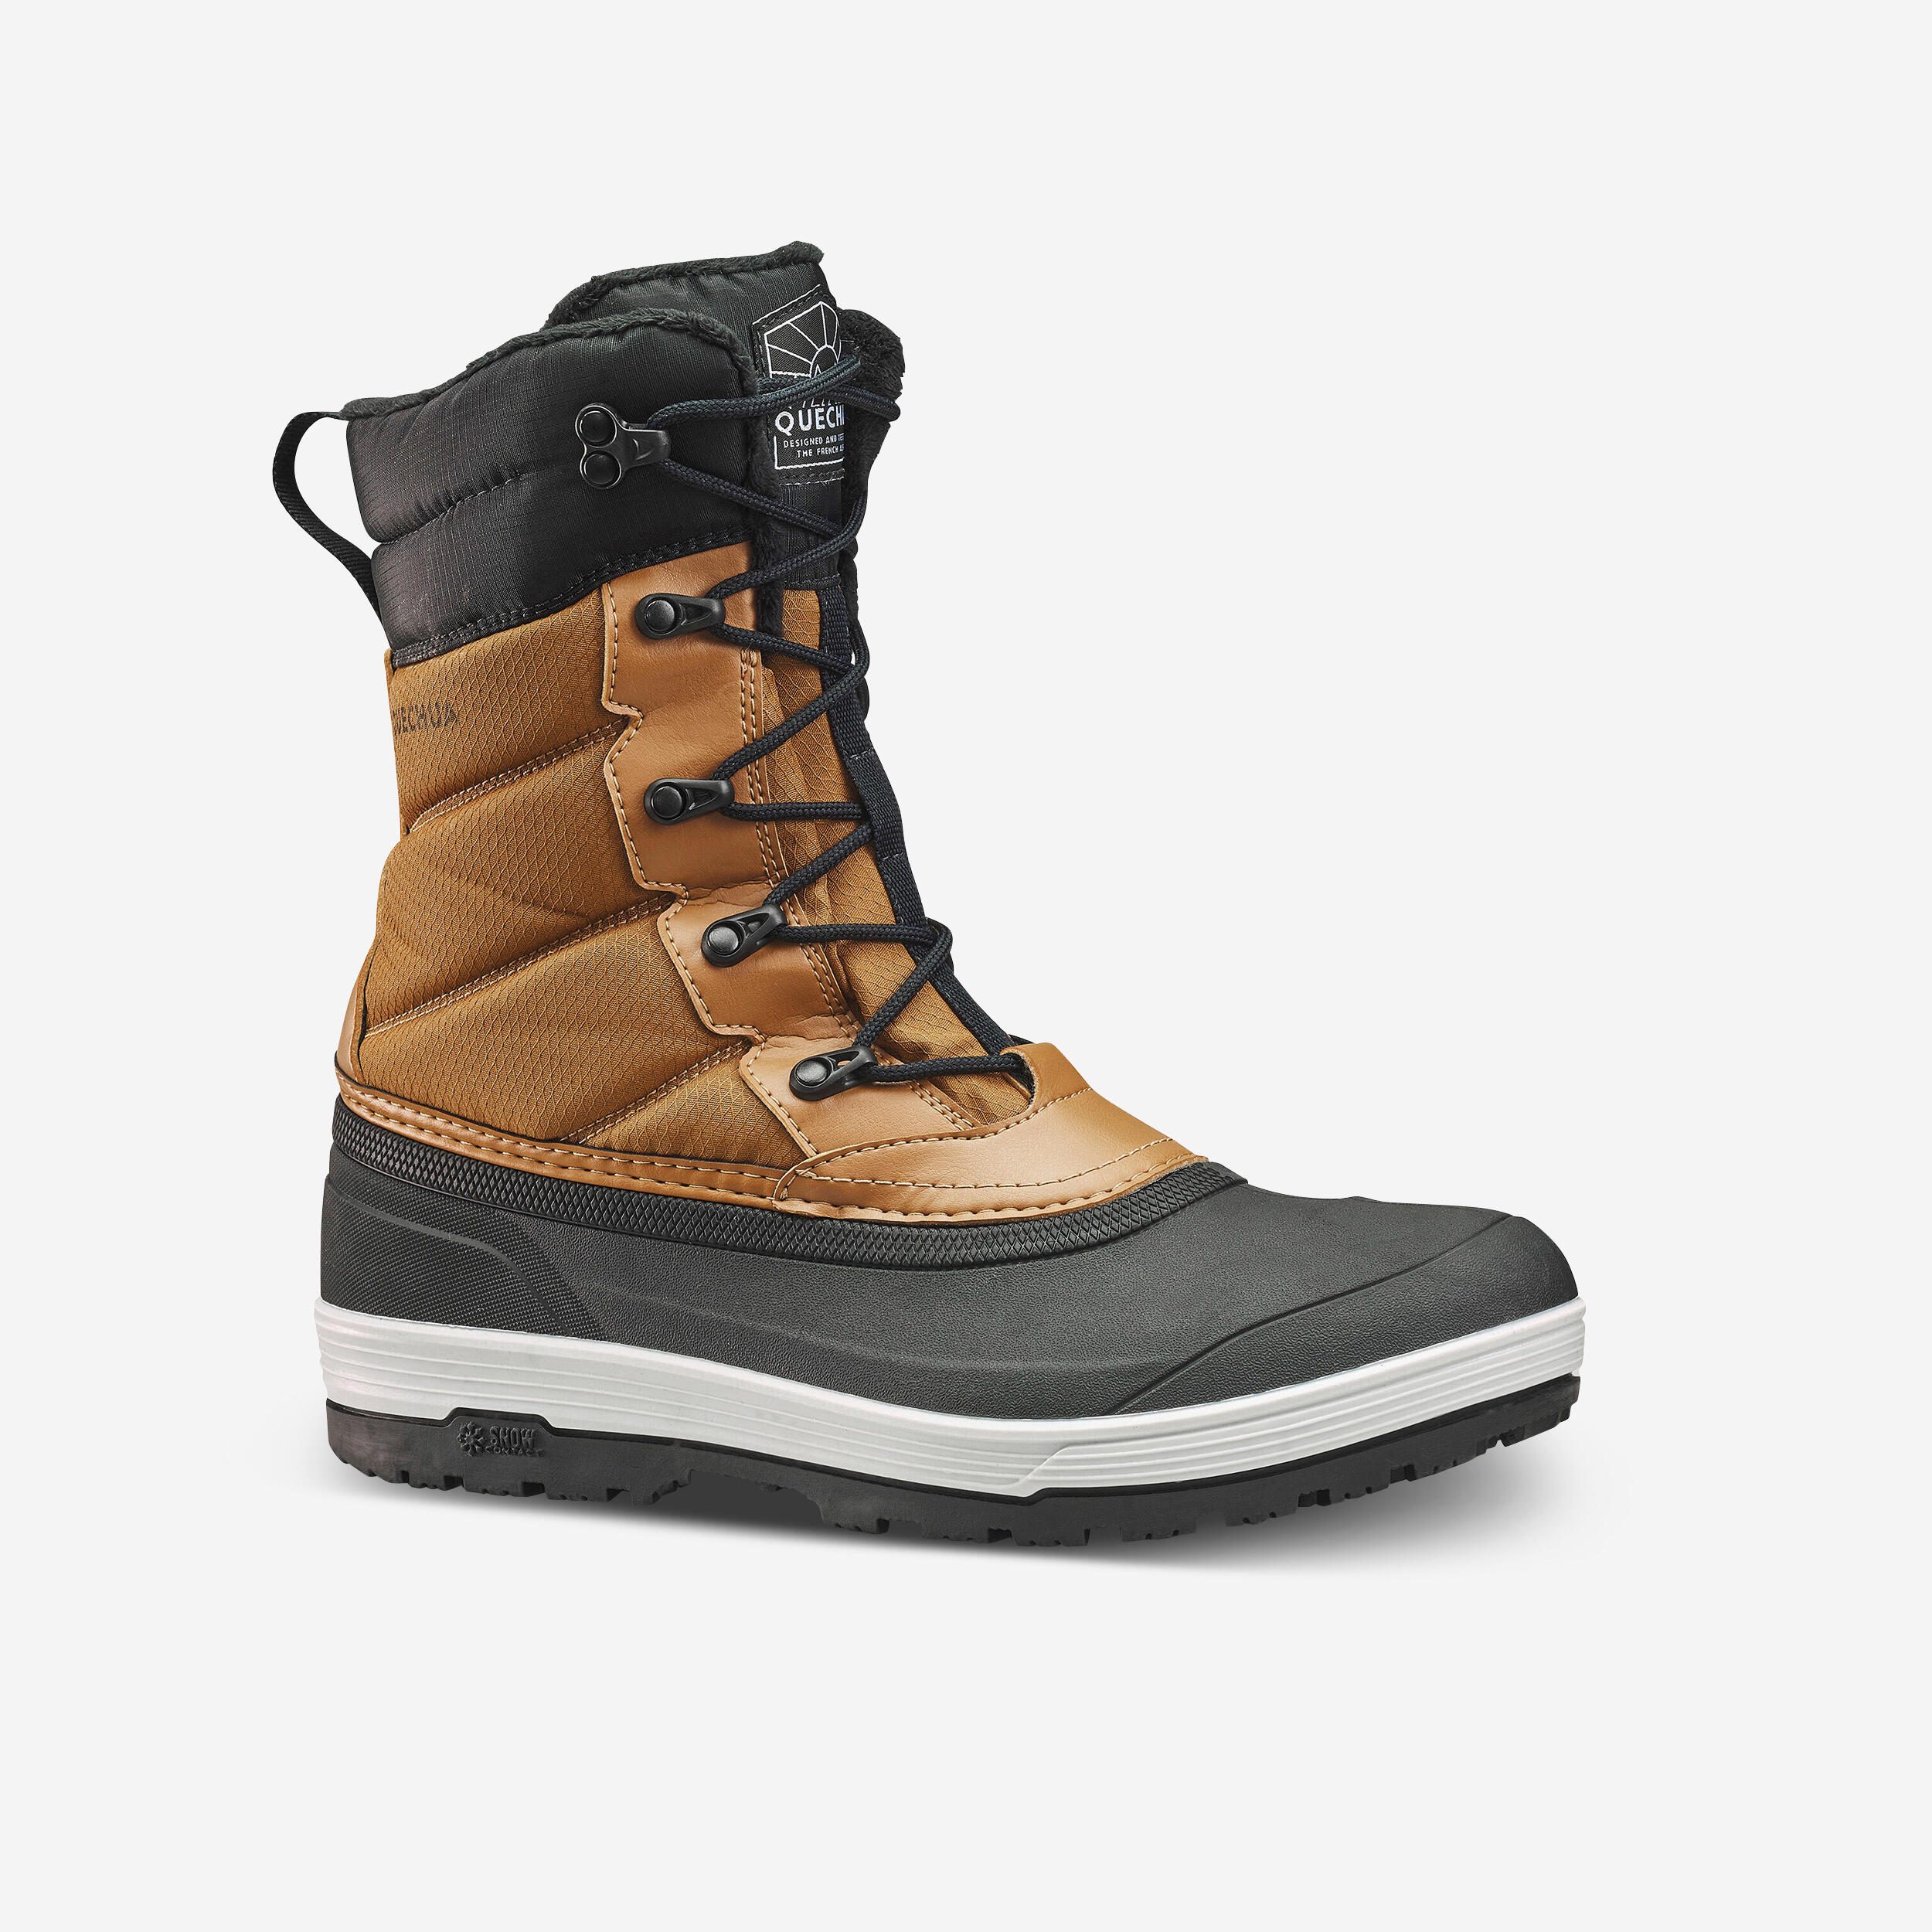 Warm Waterproof Snow Boots  - SH500 lace-up -  Men’s 1/9